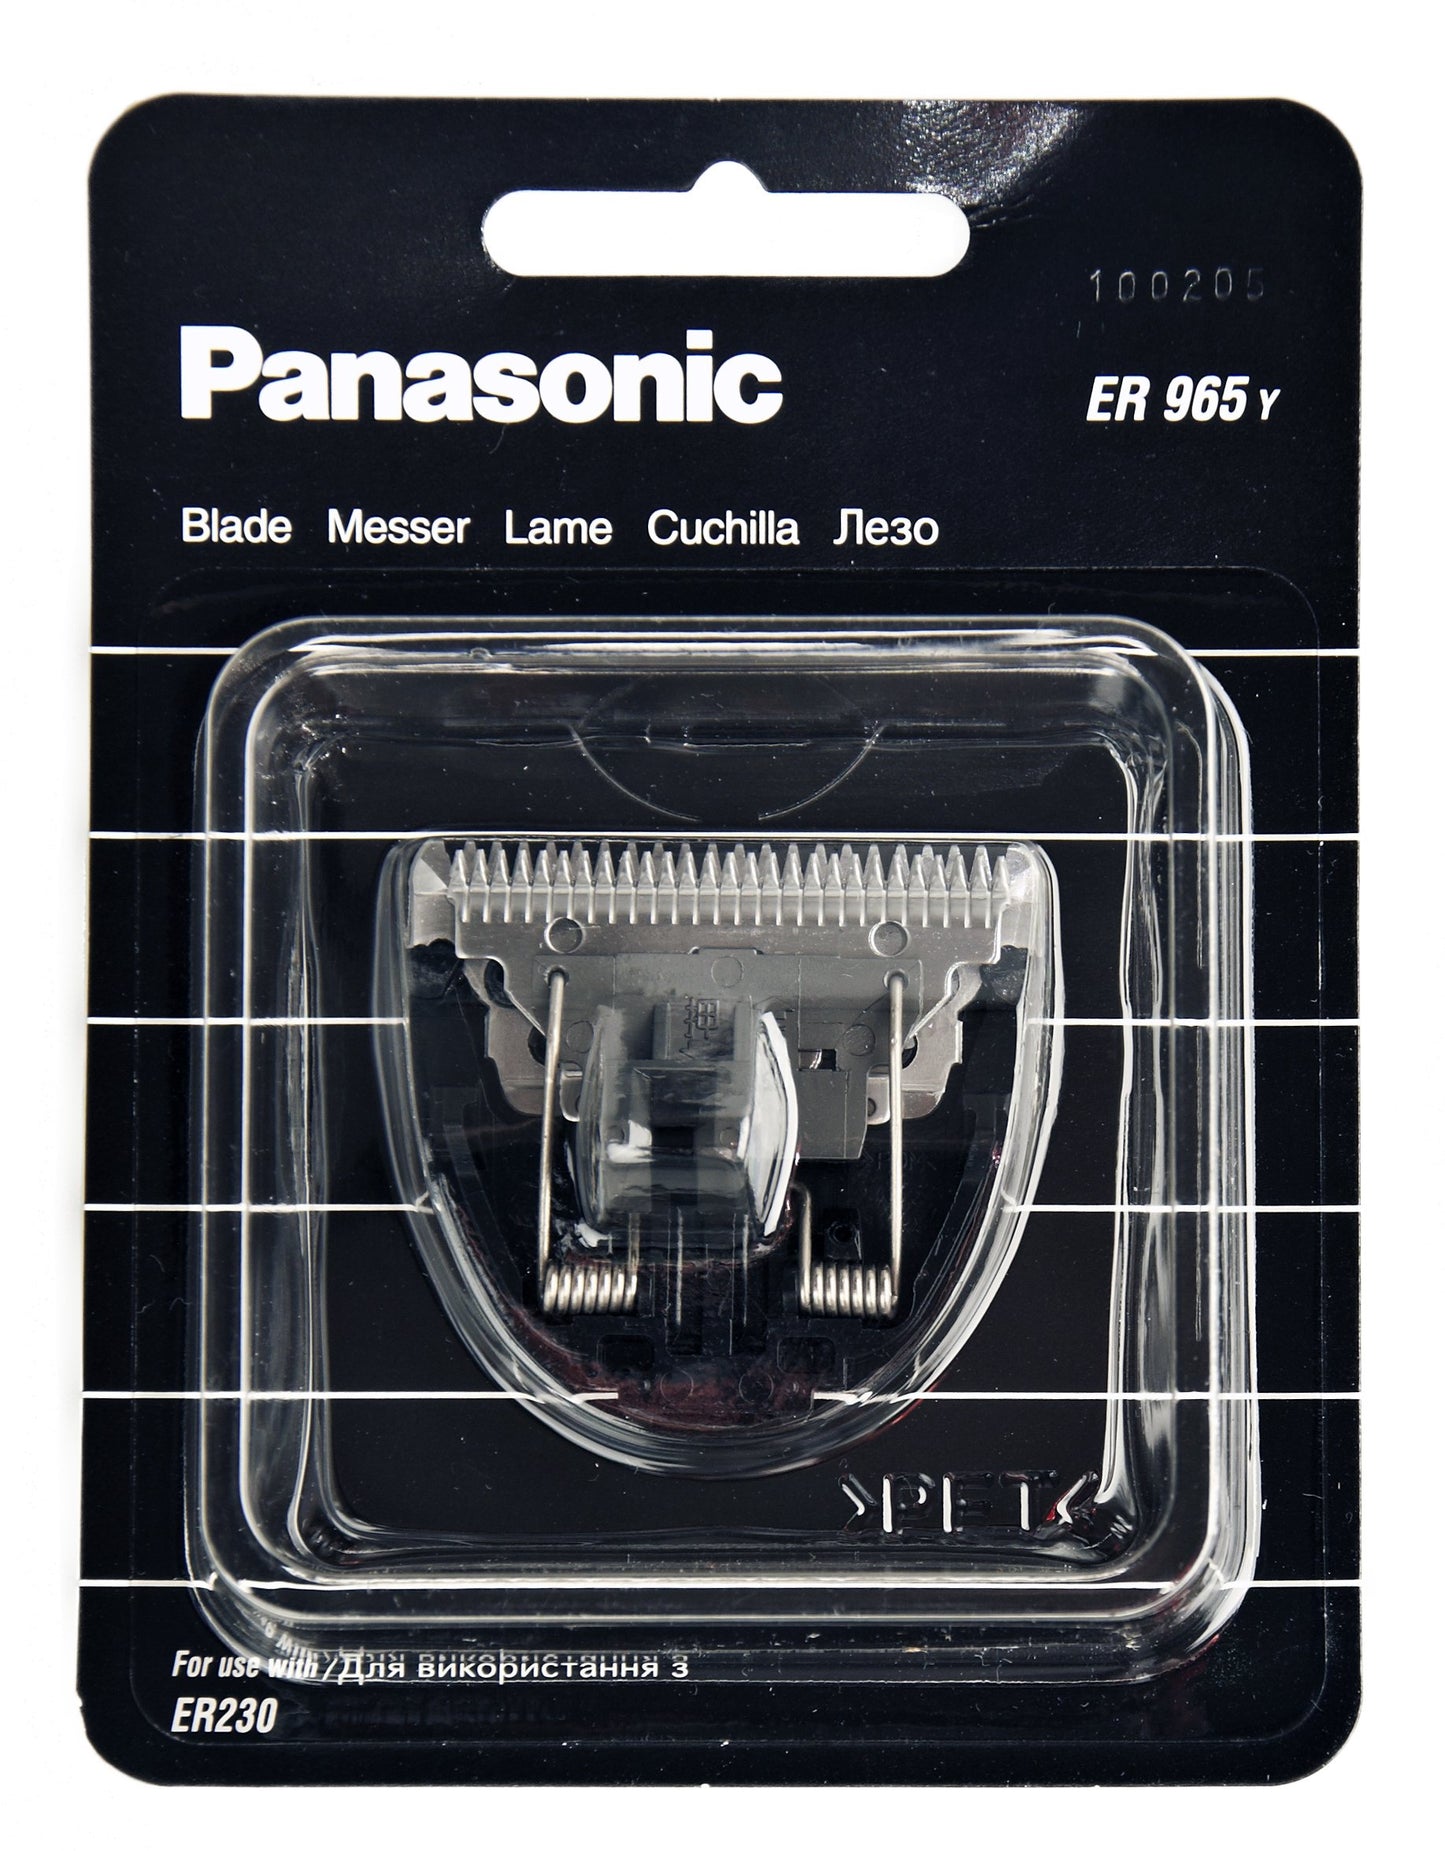 Panasonic Replacement Blade for Panasonic ER-2302/ER-2301/ER-230, Type WER965Y